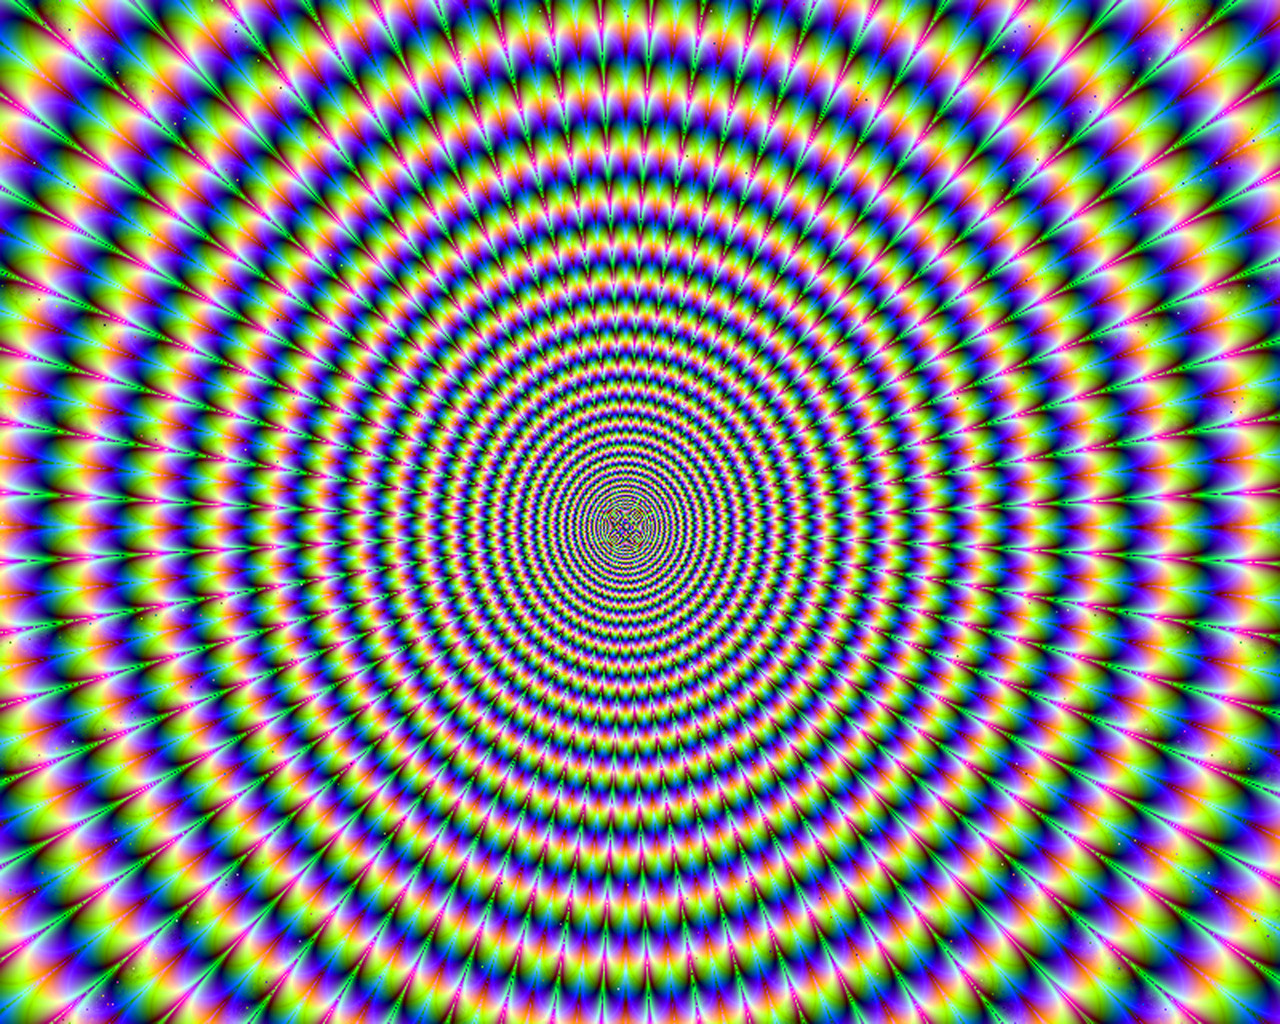 Awesome illusion